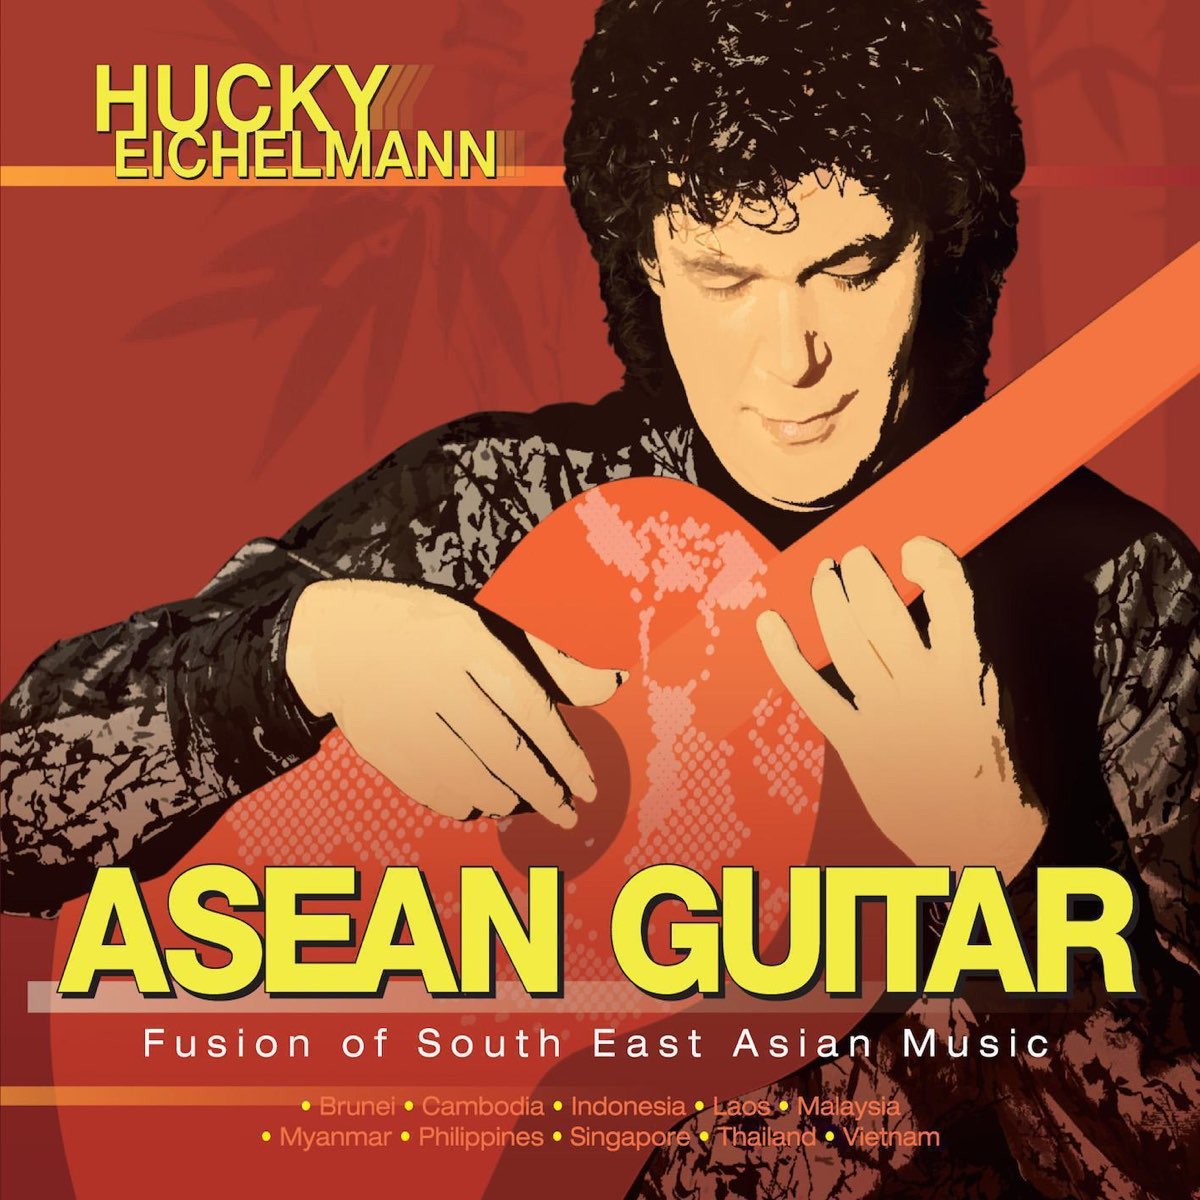 Asia music. Hucky man.